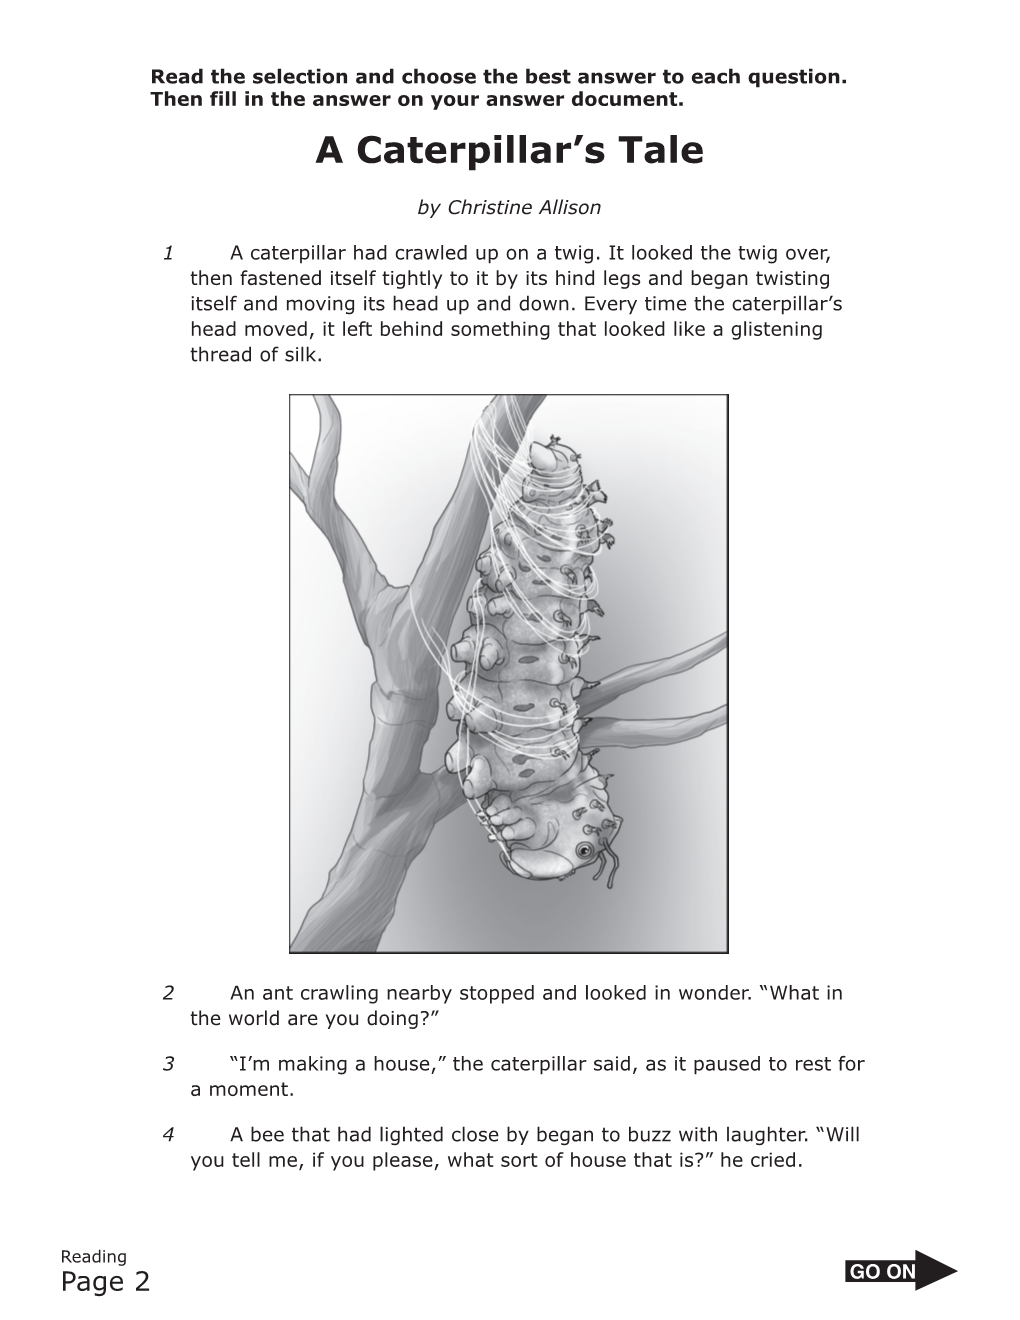 A Caterpillar's Tale